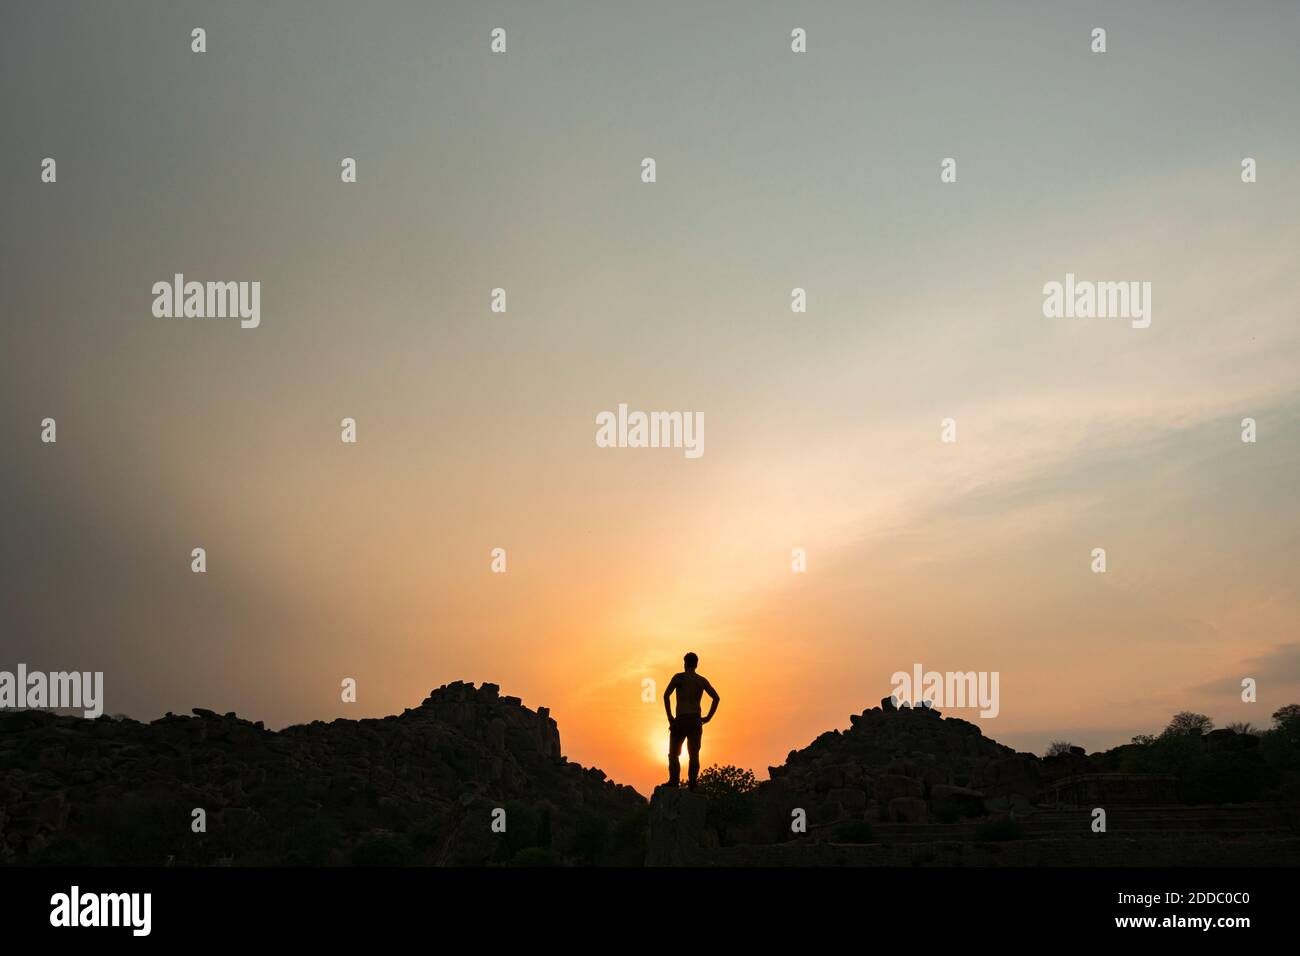 Silhouette of person admiring setting sun Stock Photo